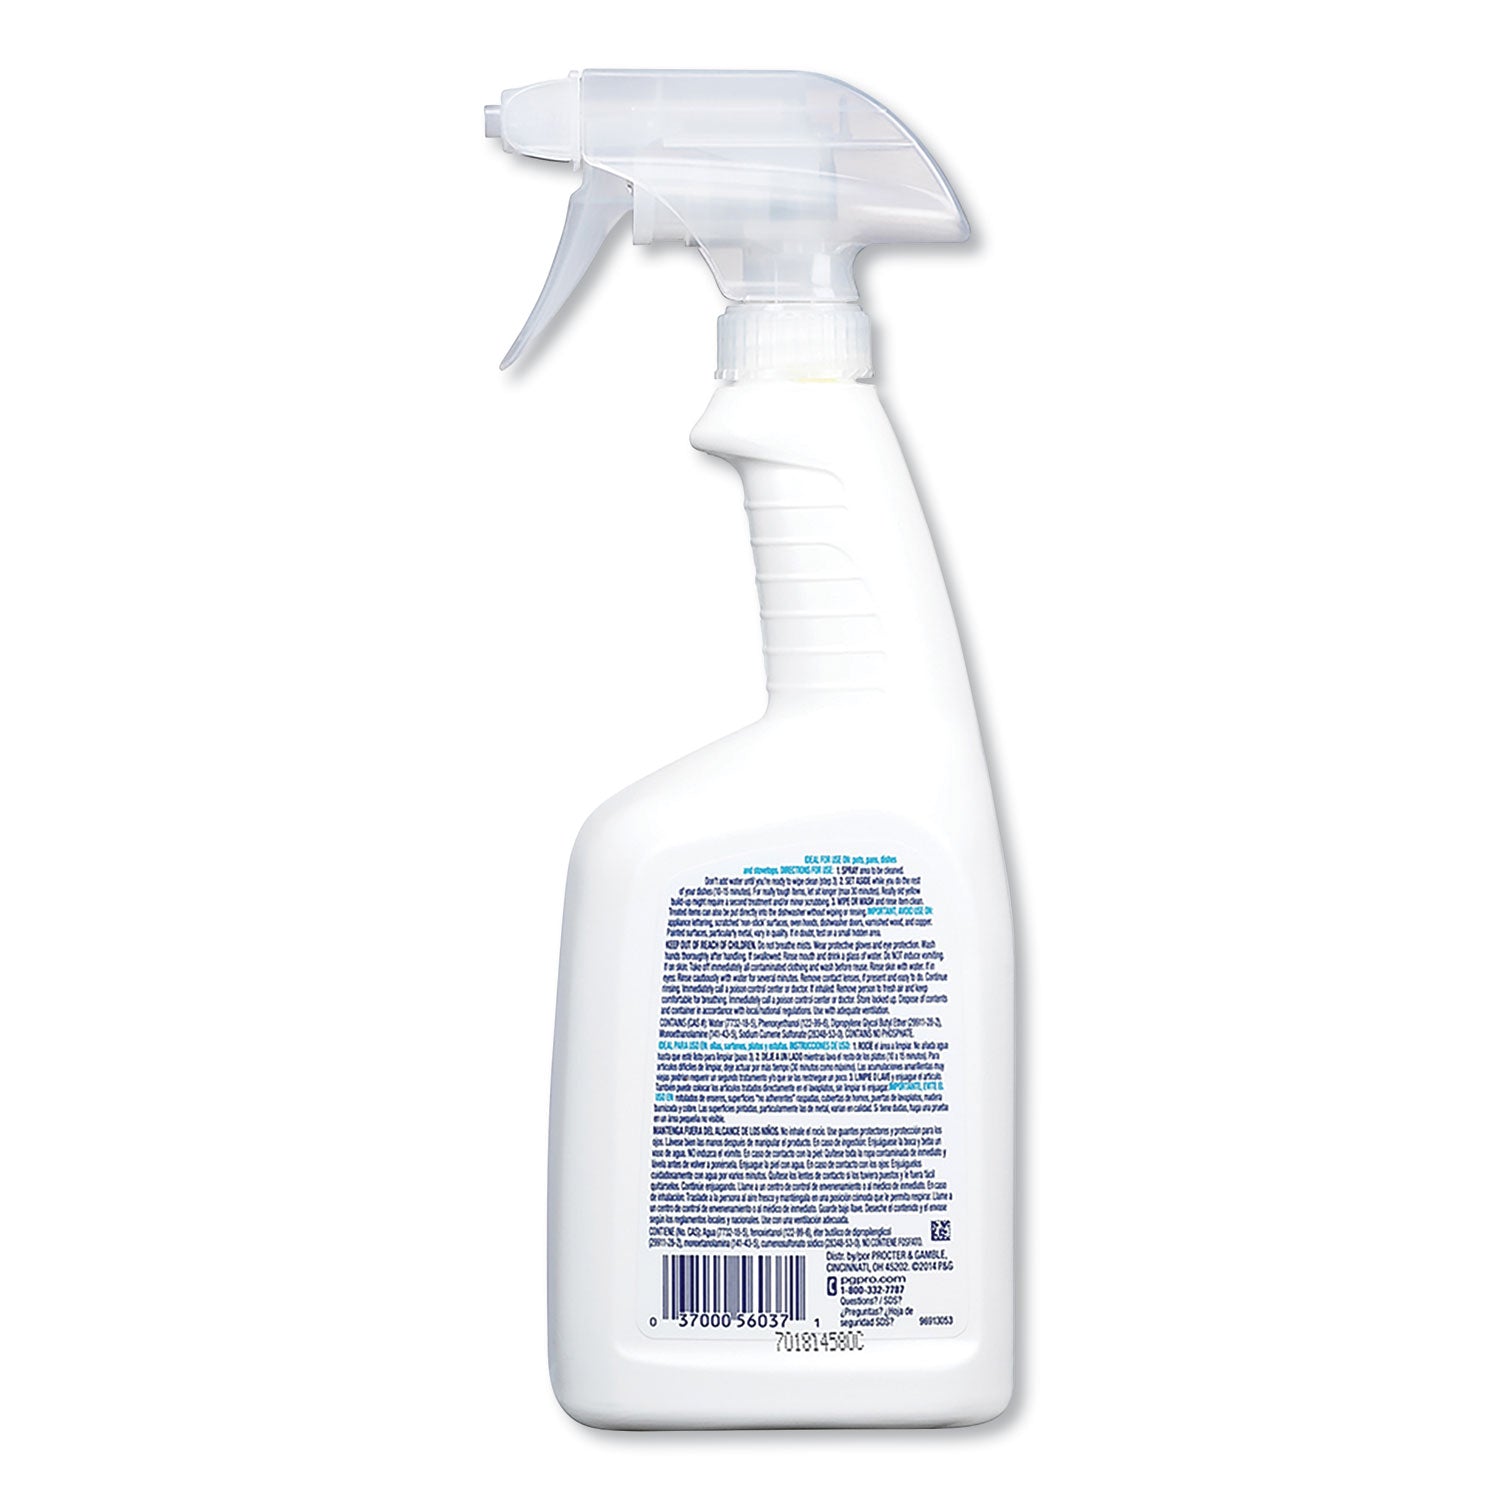 Liquid Ready-To-Use Grease Fighting Power Dissolver Spray, 32 oz Spray Bottle, 6/Carton - 